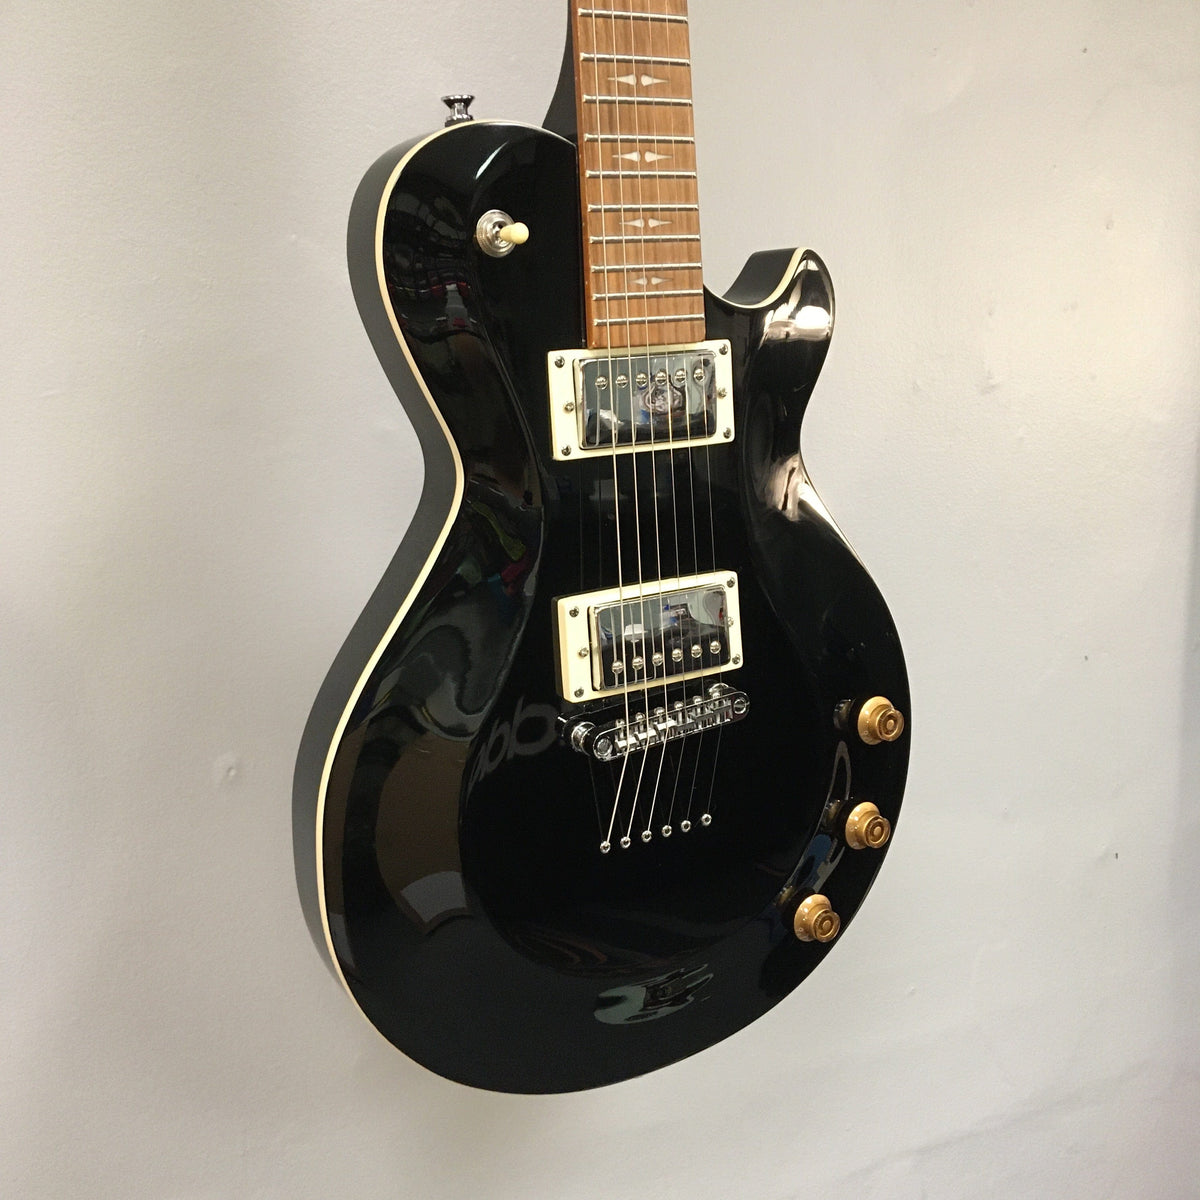 Michael Kelly Patriot Decree Standard Black Guitars on Main